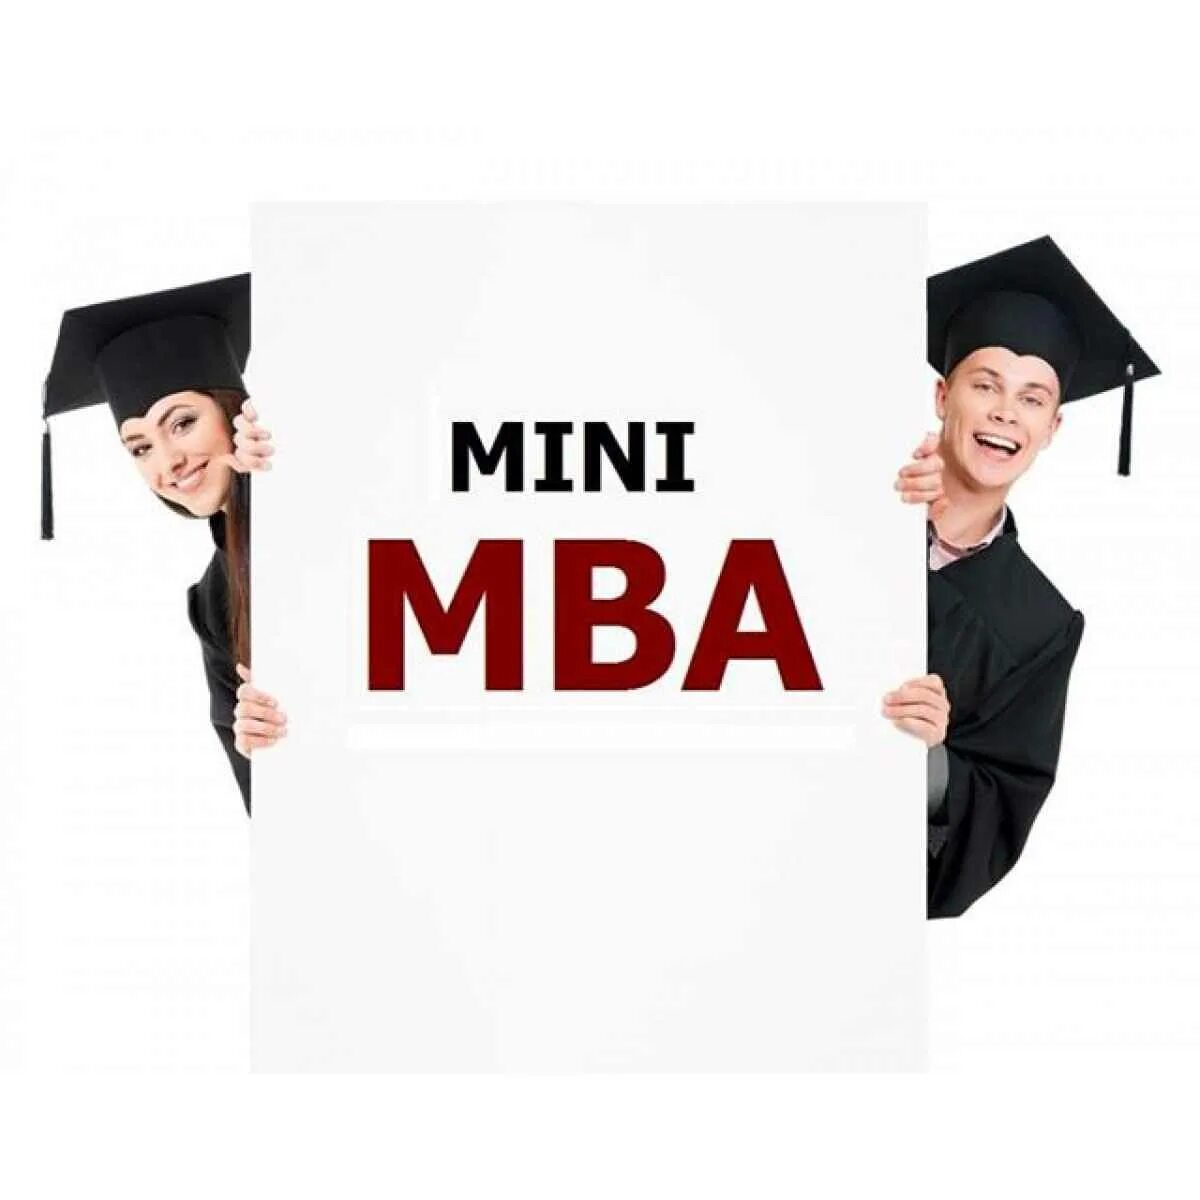 Mini MBA. День Mini MBA. МВА что это в образовании.